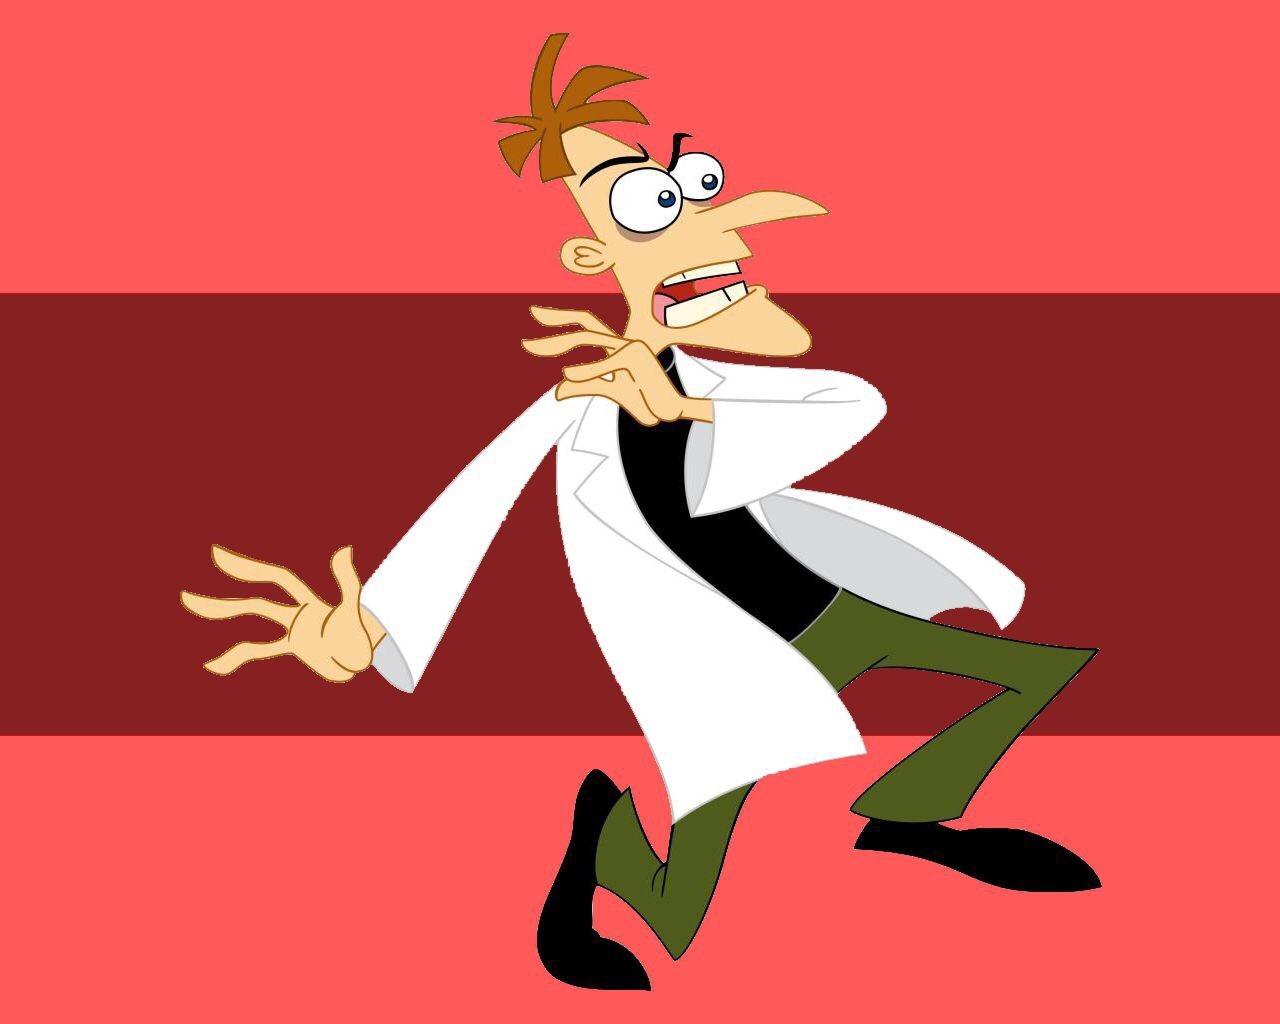 Dr Heinz Doofenshmirtz